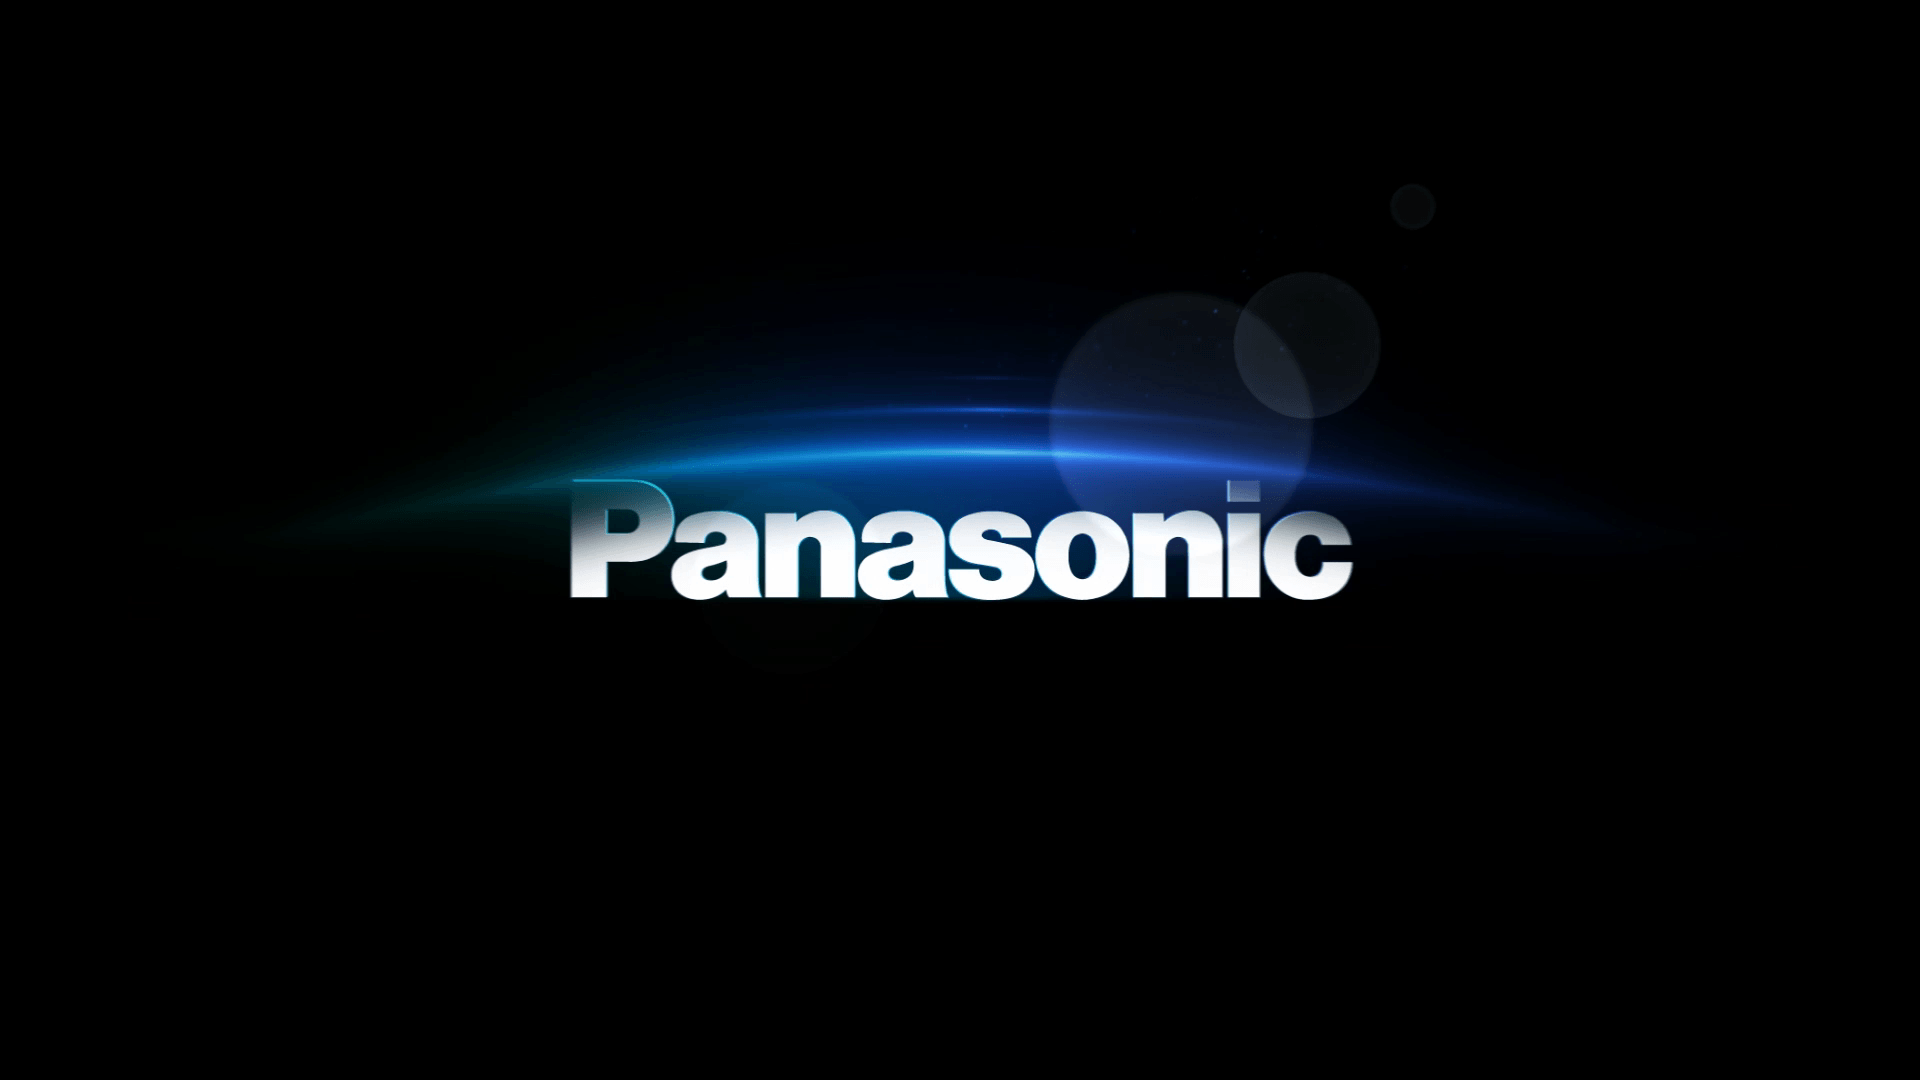 Panasonic Wallpapers - Top Free